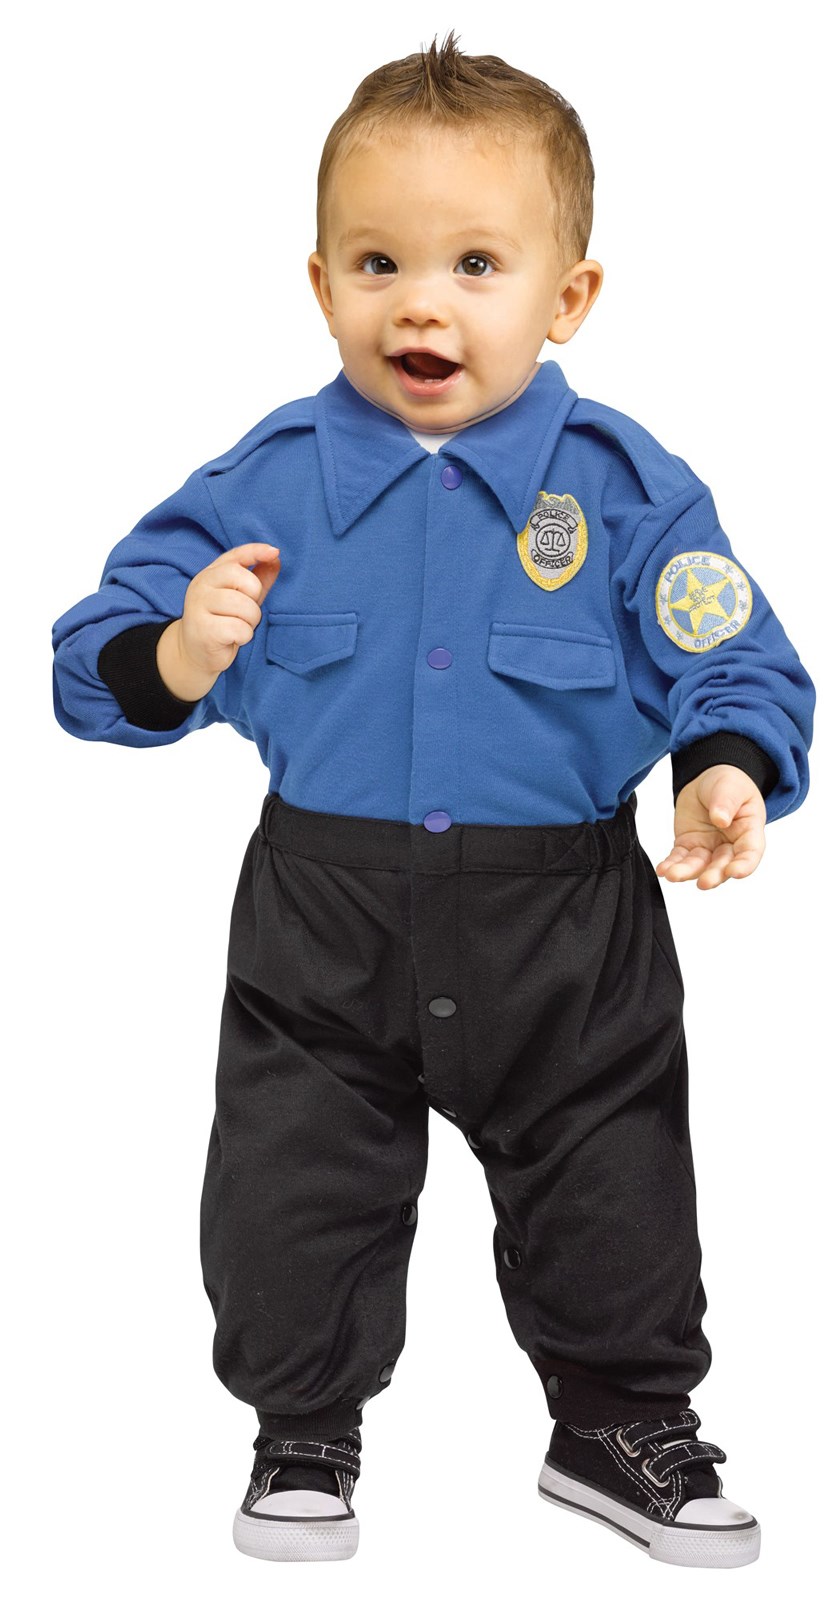 Toddler Policeman Costume